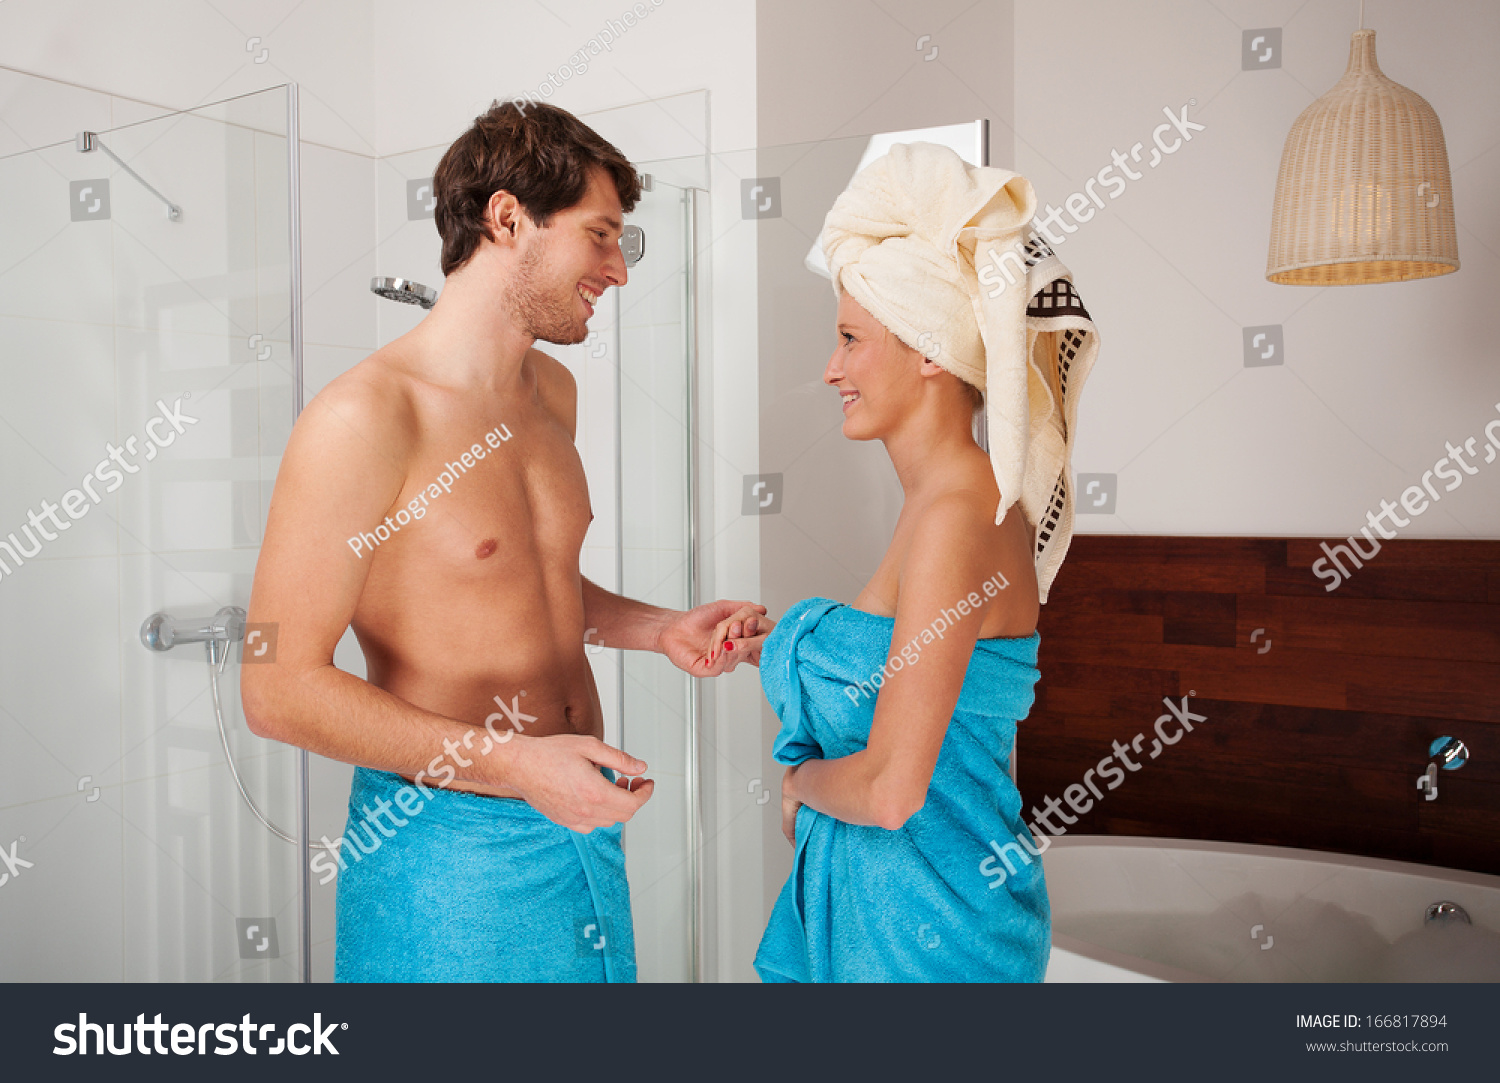 Мужчина и женщина в полотенце